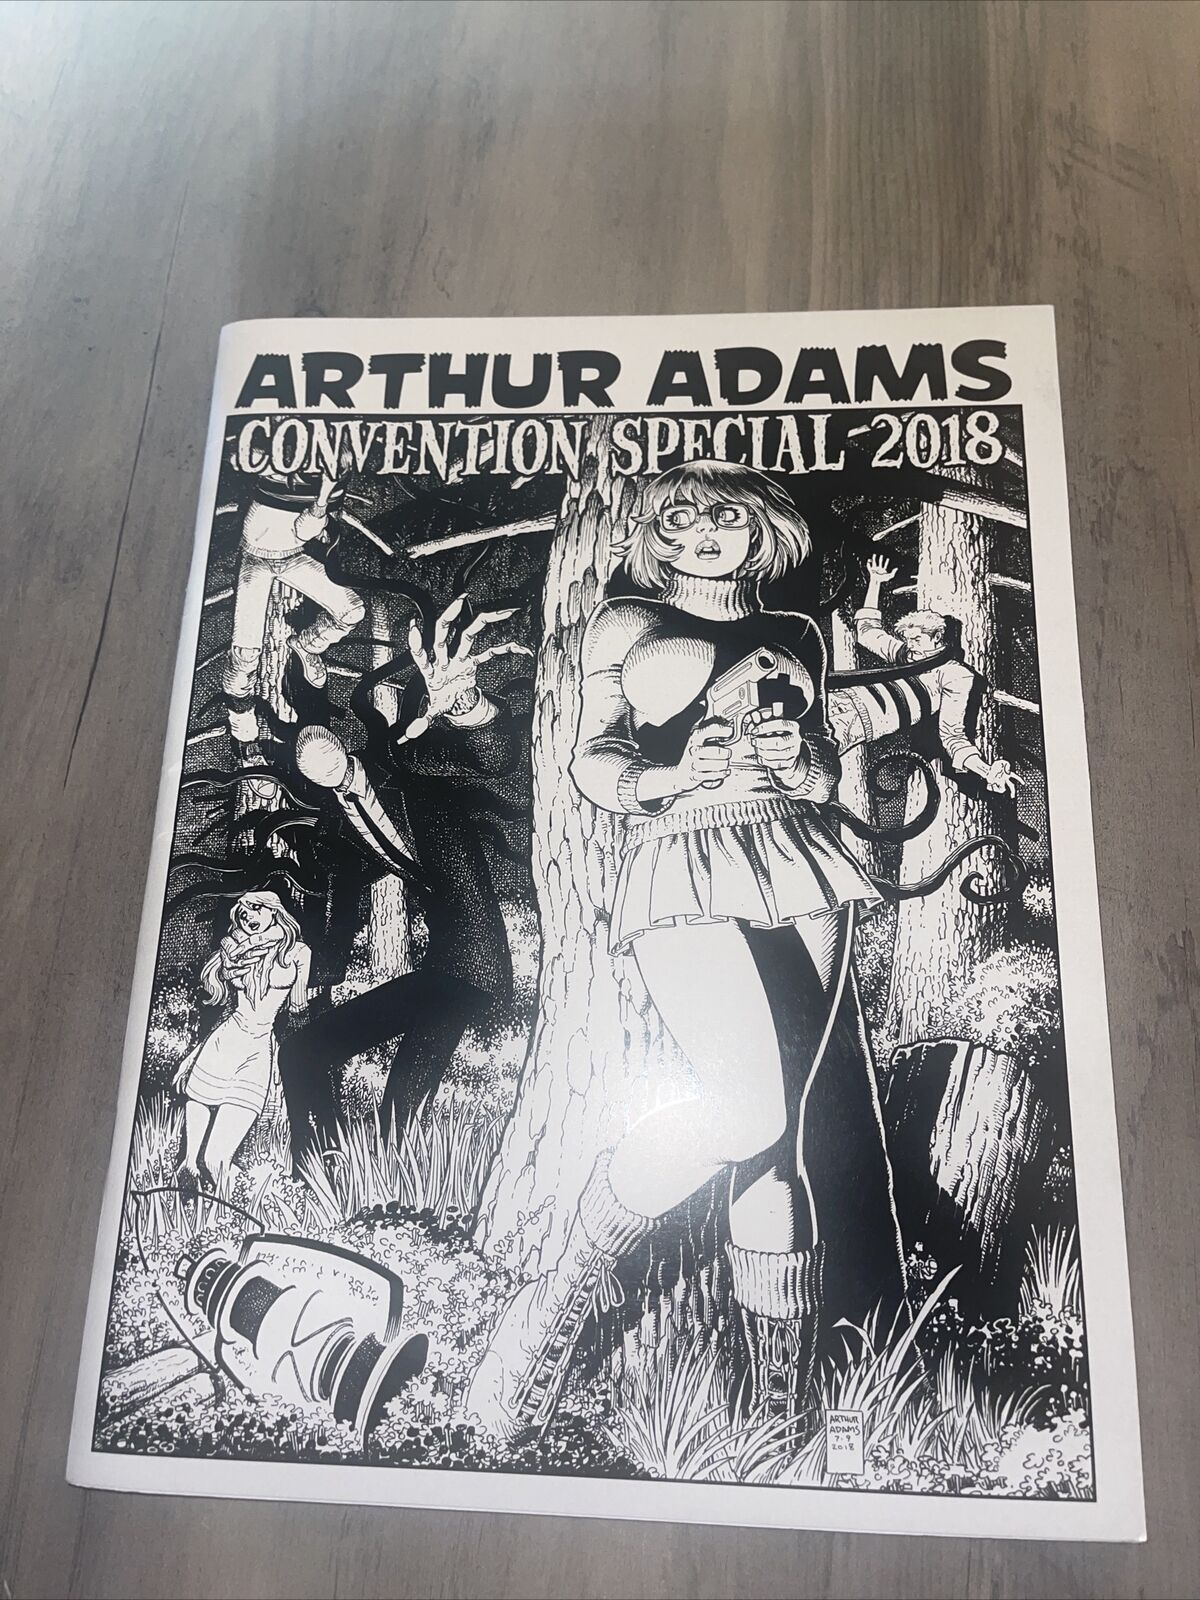 ARTHUR ADAMS Sketchbook Convention Special 2018 Signed Autographed (Damaged)